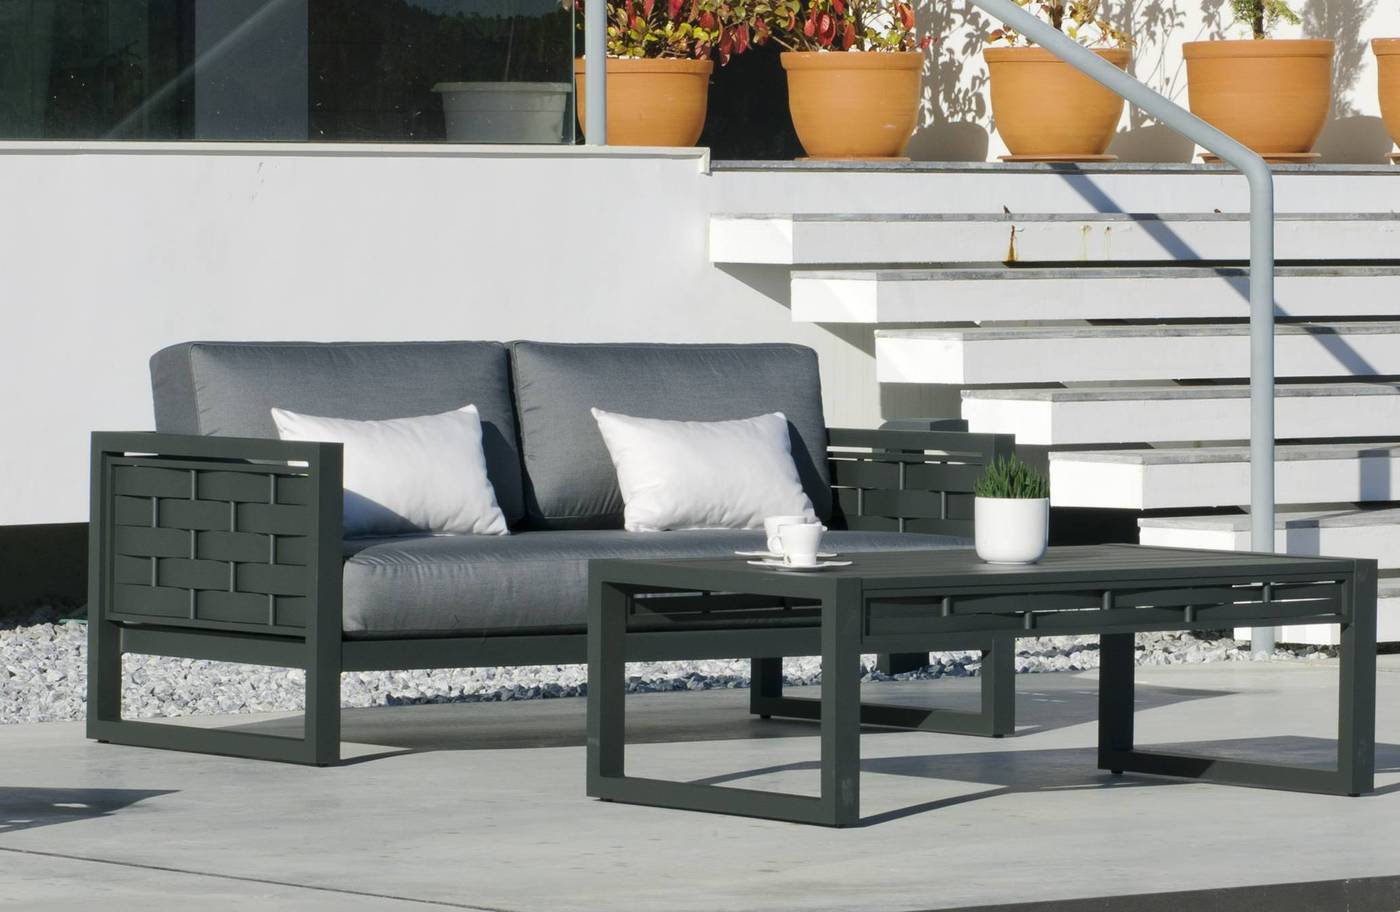 Lujoso sofá 2 plazas con cojines gran confort desenfundables. Estructura 100% de aluminio en color blanco, antracita o champagne.